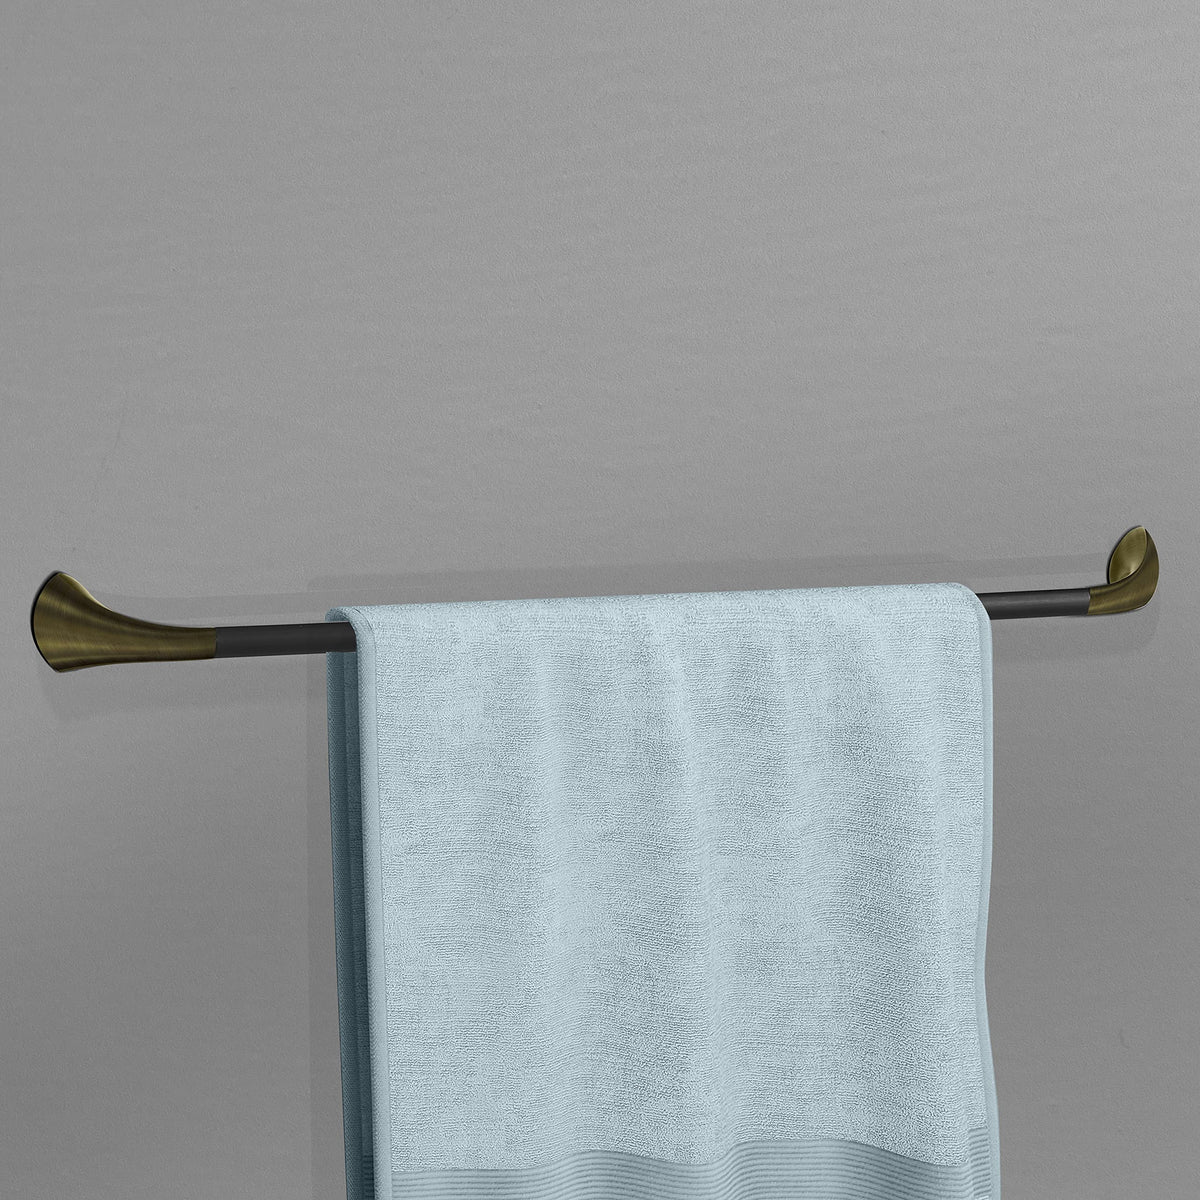 Plantex Fully Brass Smero Towel Rod for Bathroom/Towel Stand/Hanger/Bathroom Accessories (24 Inch-Black Antique)